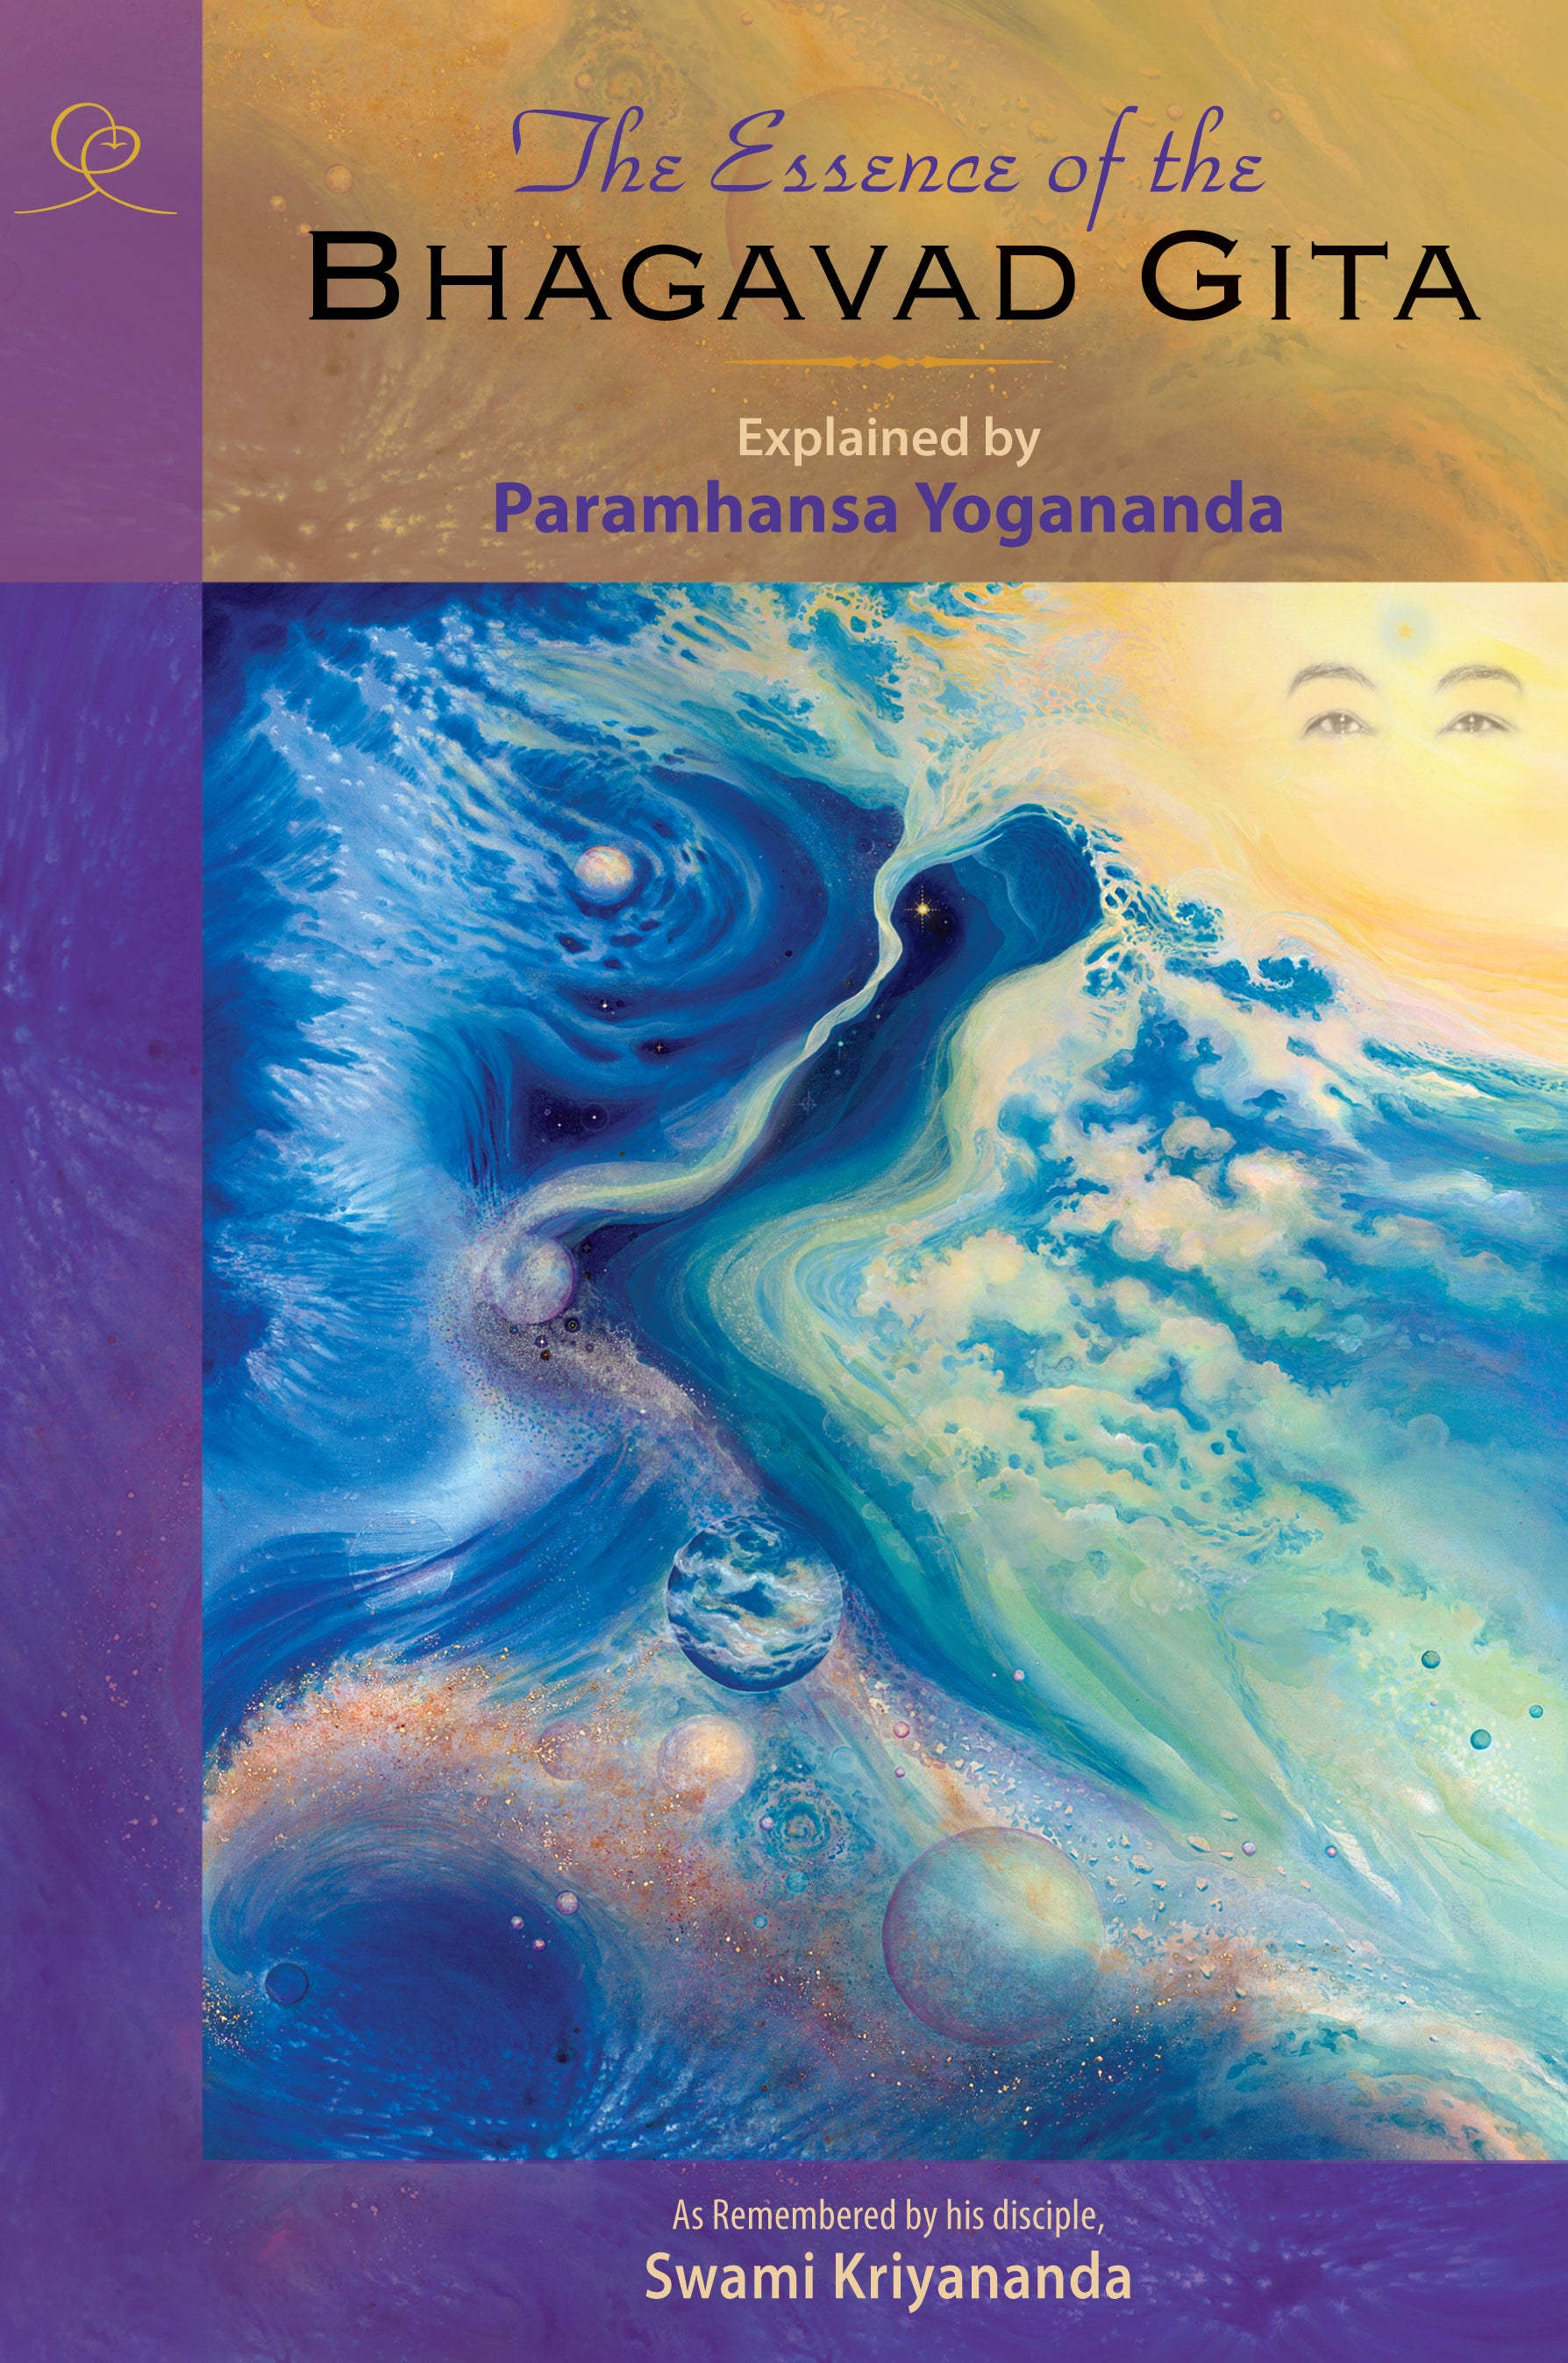 The Essence of the Bhagavad Gita: Explained by Paramhansa Yogananda